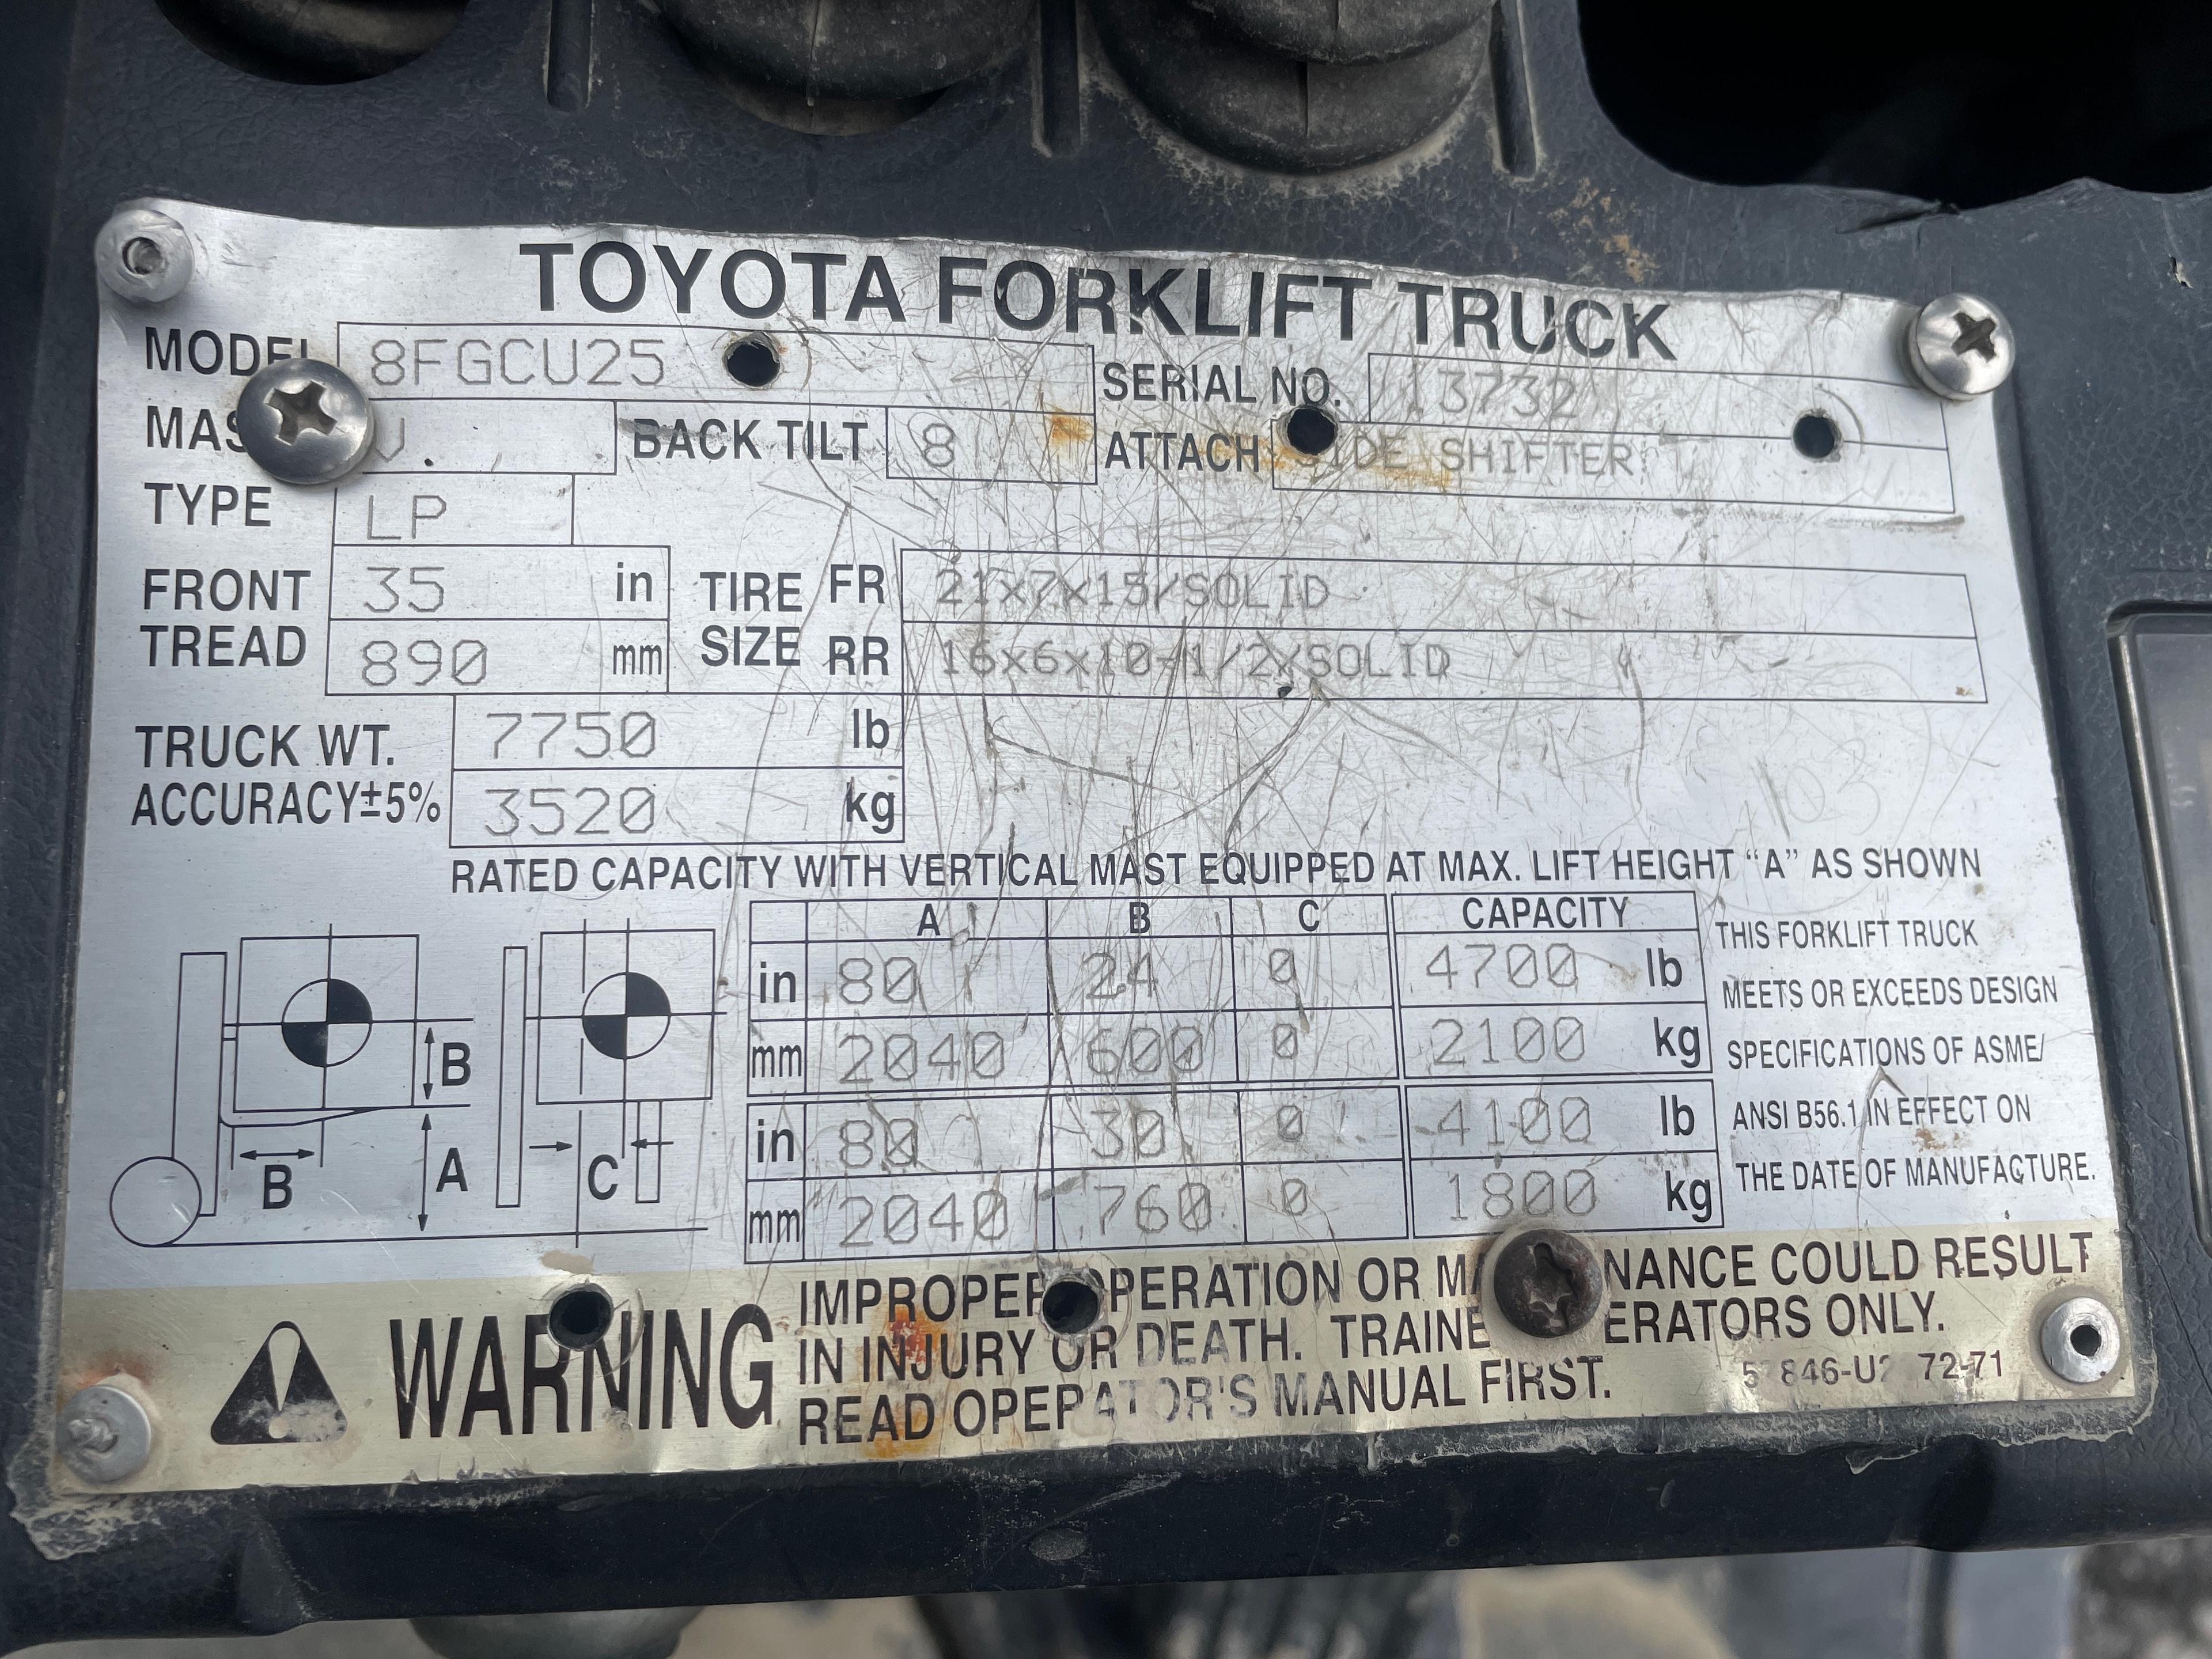 Toyota 5,000 IB LP Forklift